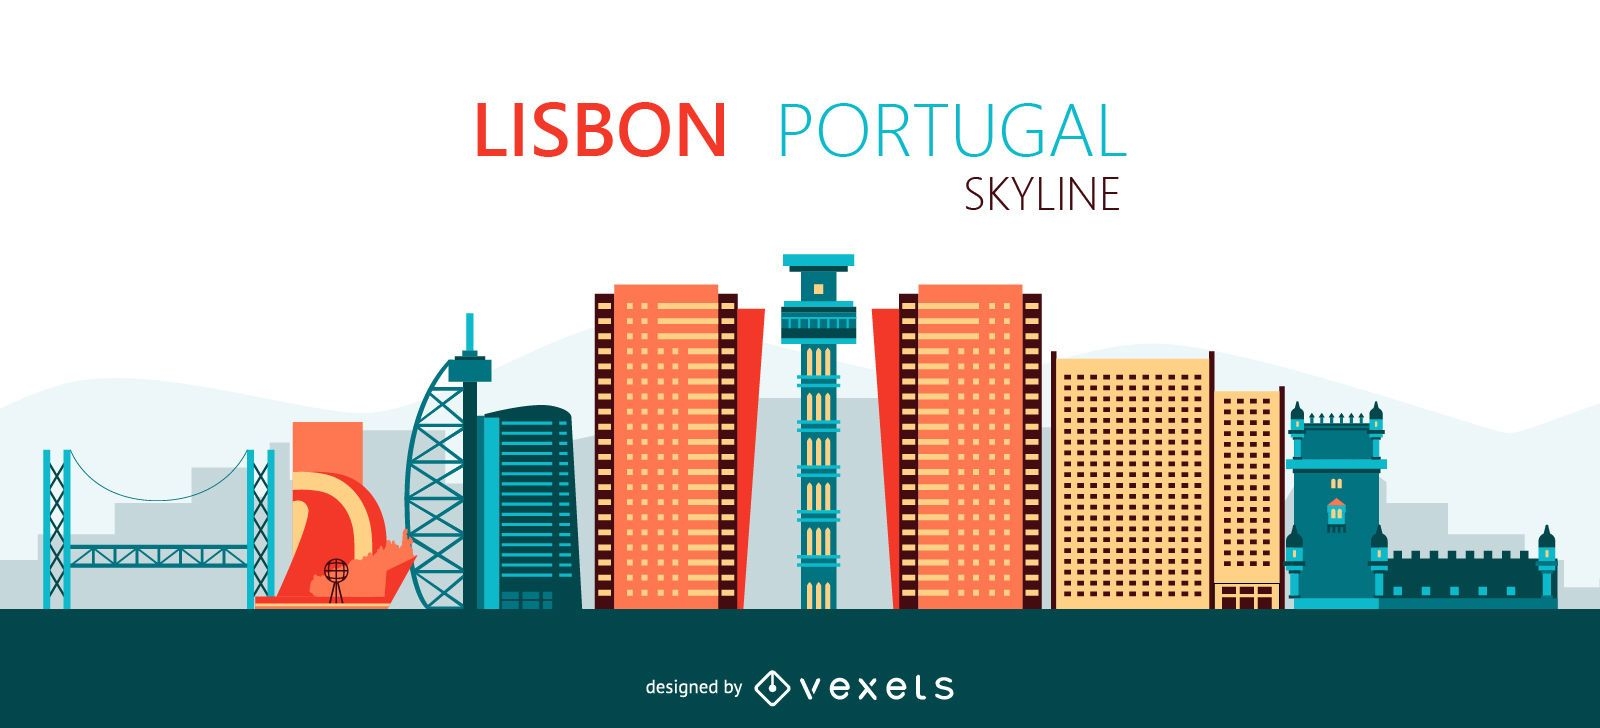 Lisbon skyline illustration